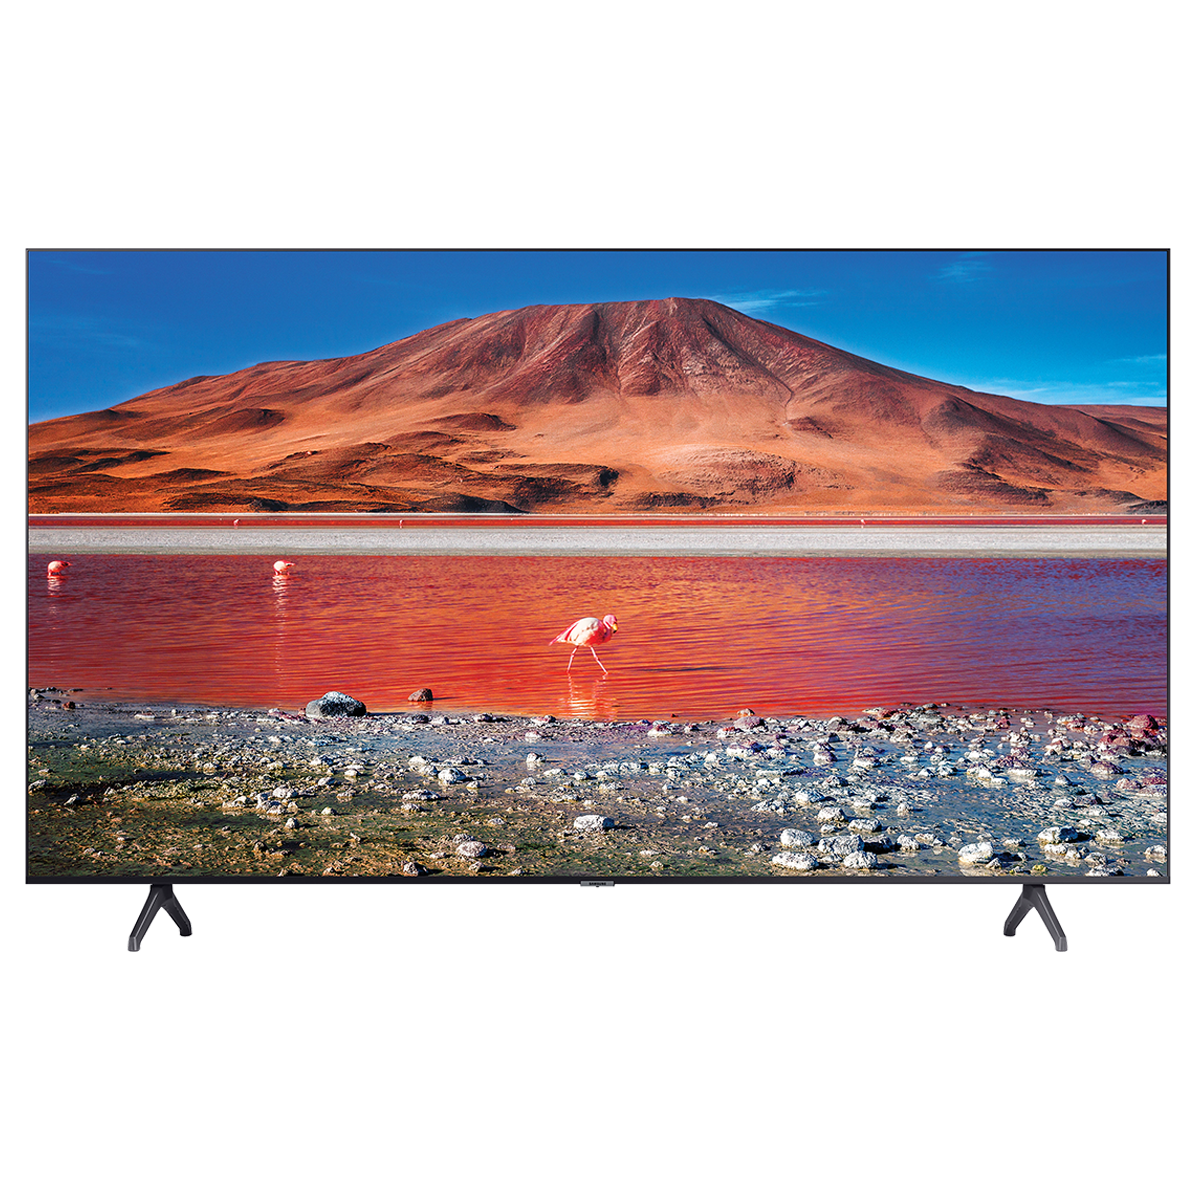 Samsung Series 7 125cm (50 Inch) 4K Ultra HD LED Smart TV (Crystal Display, UA50TU7200KXXL, Titan Grey)_1